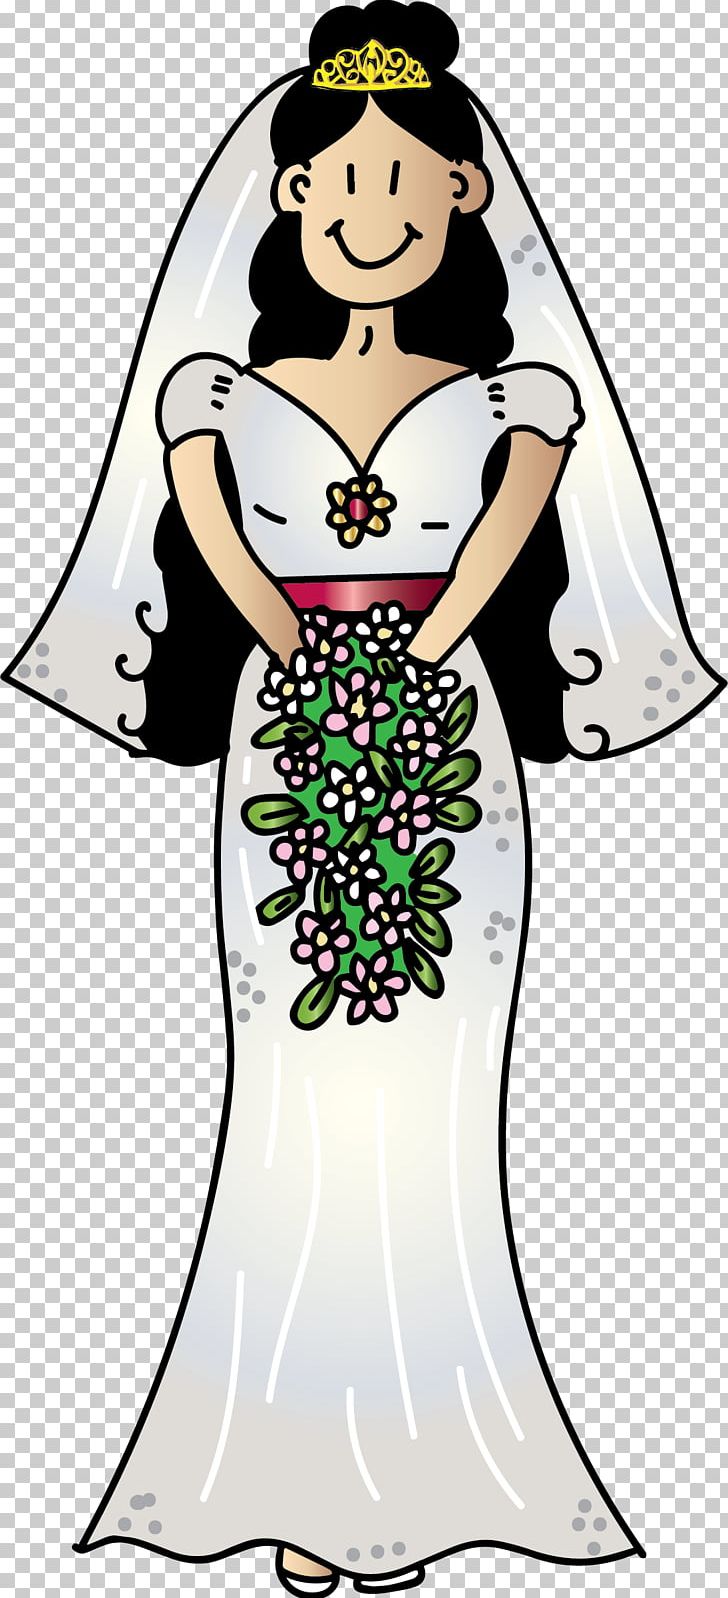 Woman Art Costume Design PNG, Clipart, Art, Artwork, Bride, Character, Costume Free PNG Download